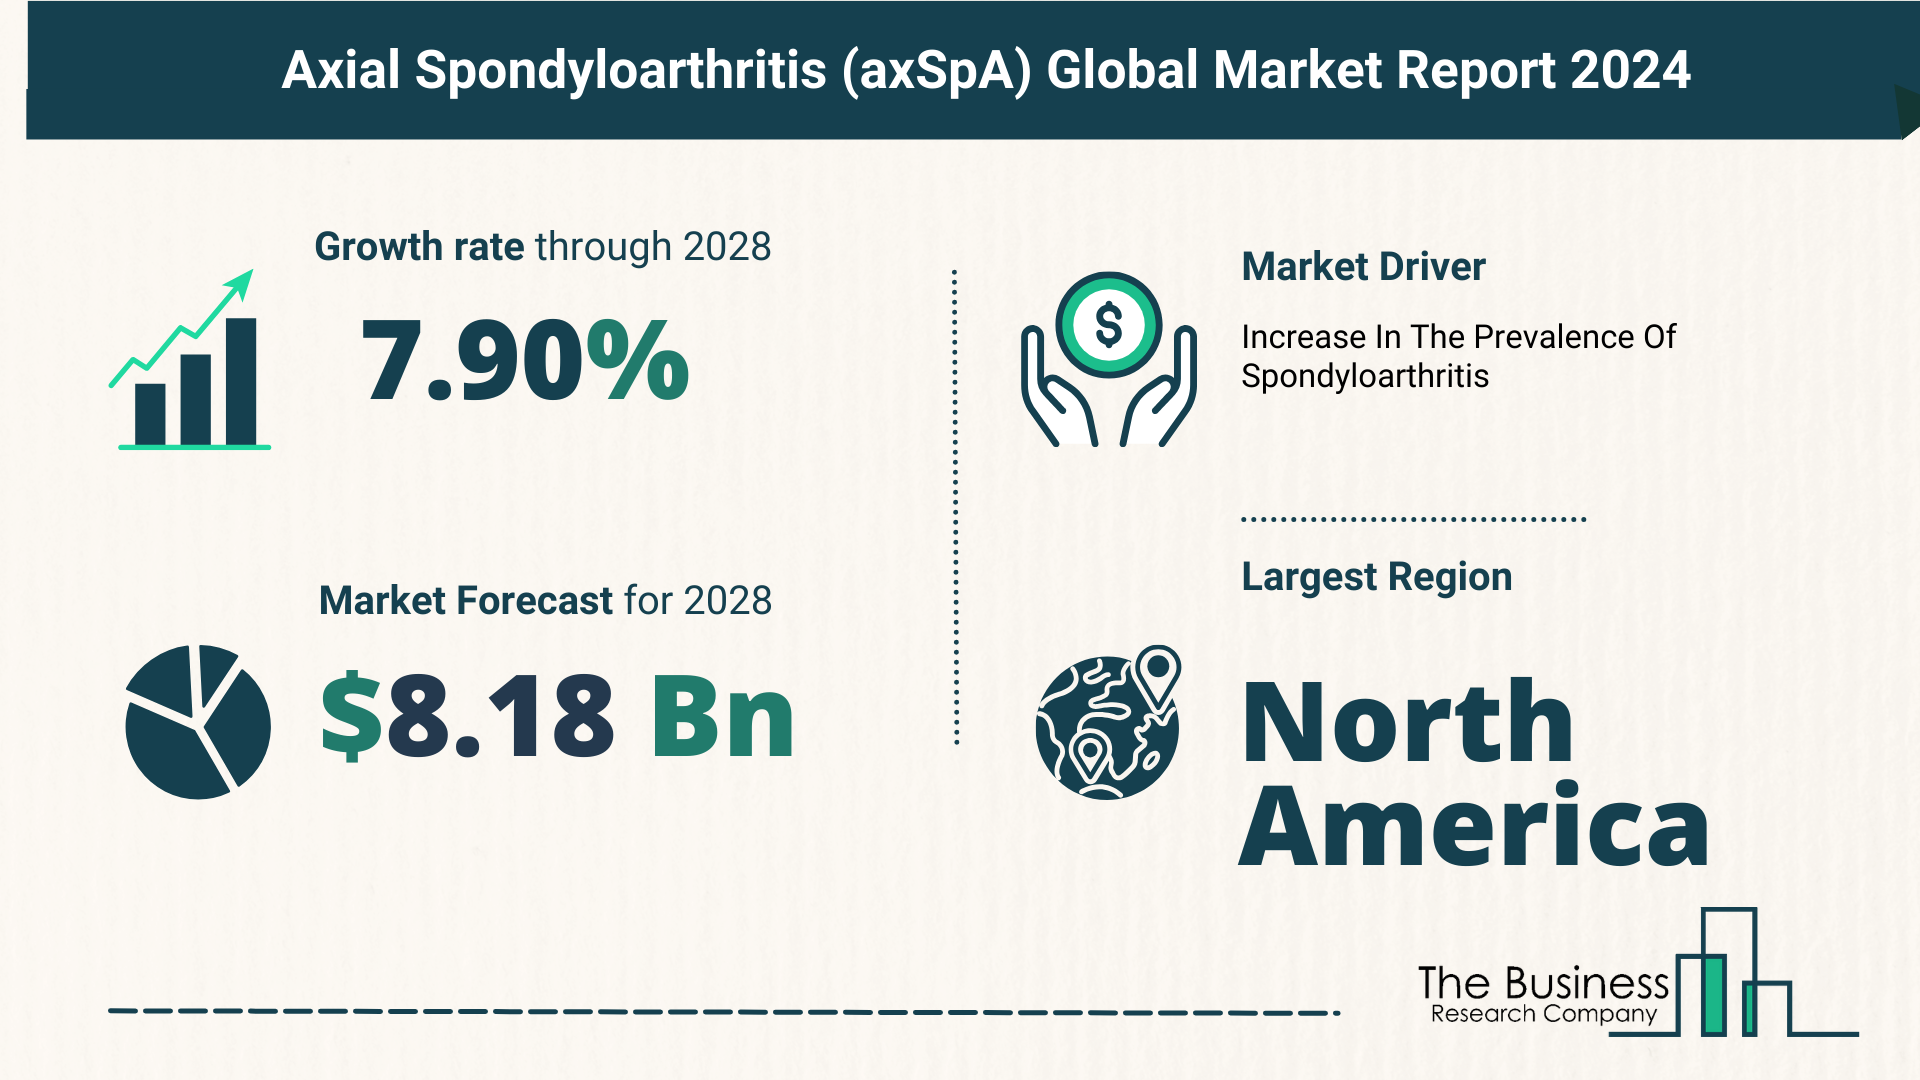 Global Axial Spondyloarthritis (axSpA) Marke